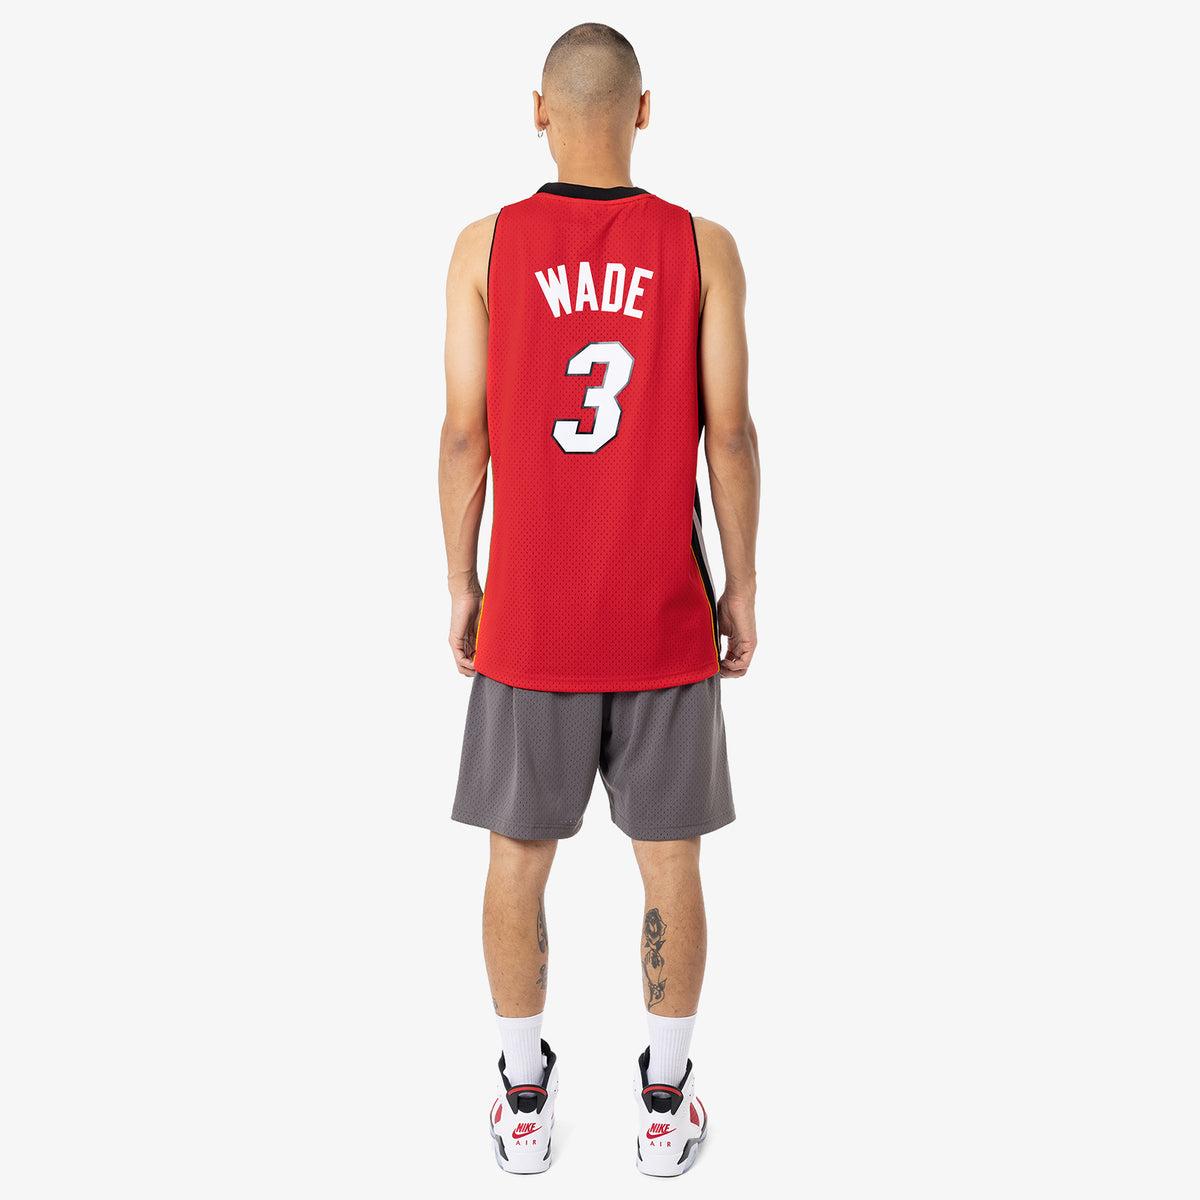 Miami Heat Dwayne Wade Adidas Basketball Jersey Black & Red -  Finland